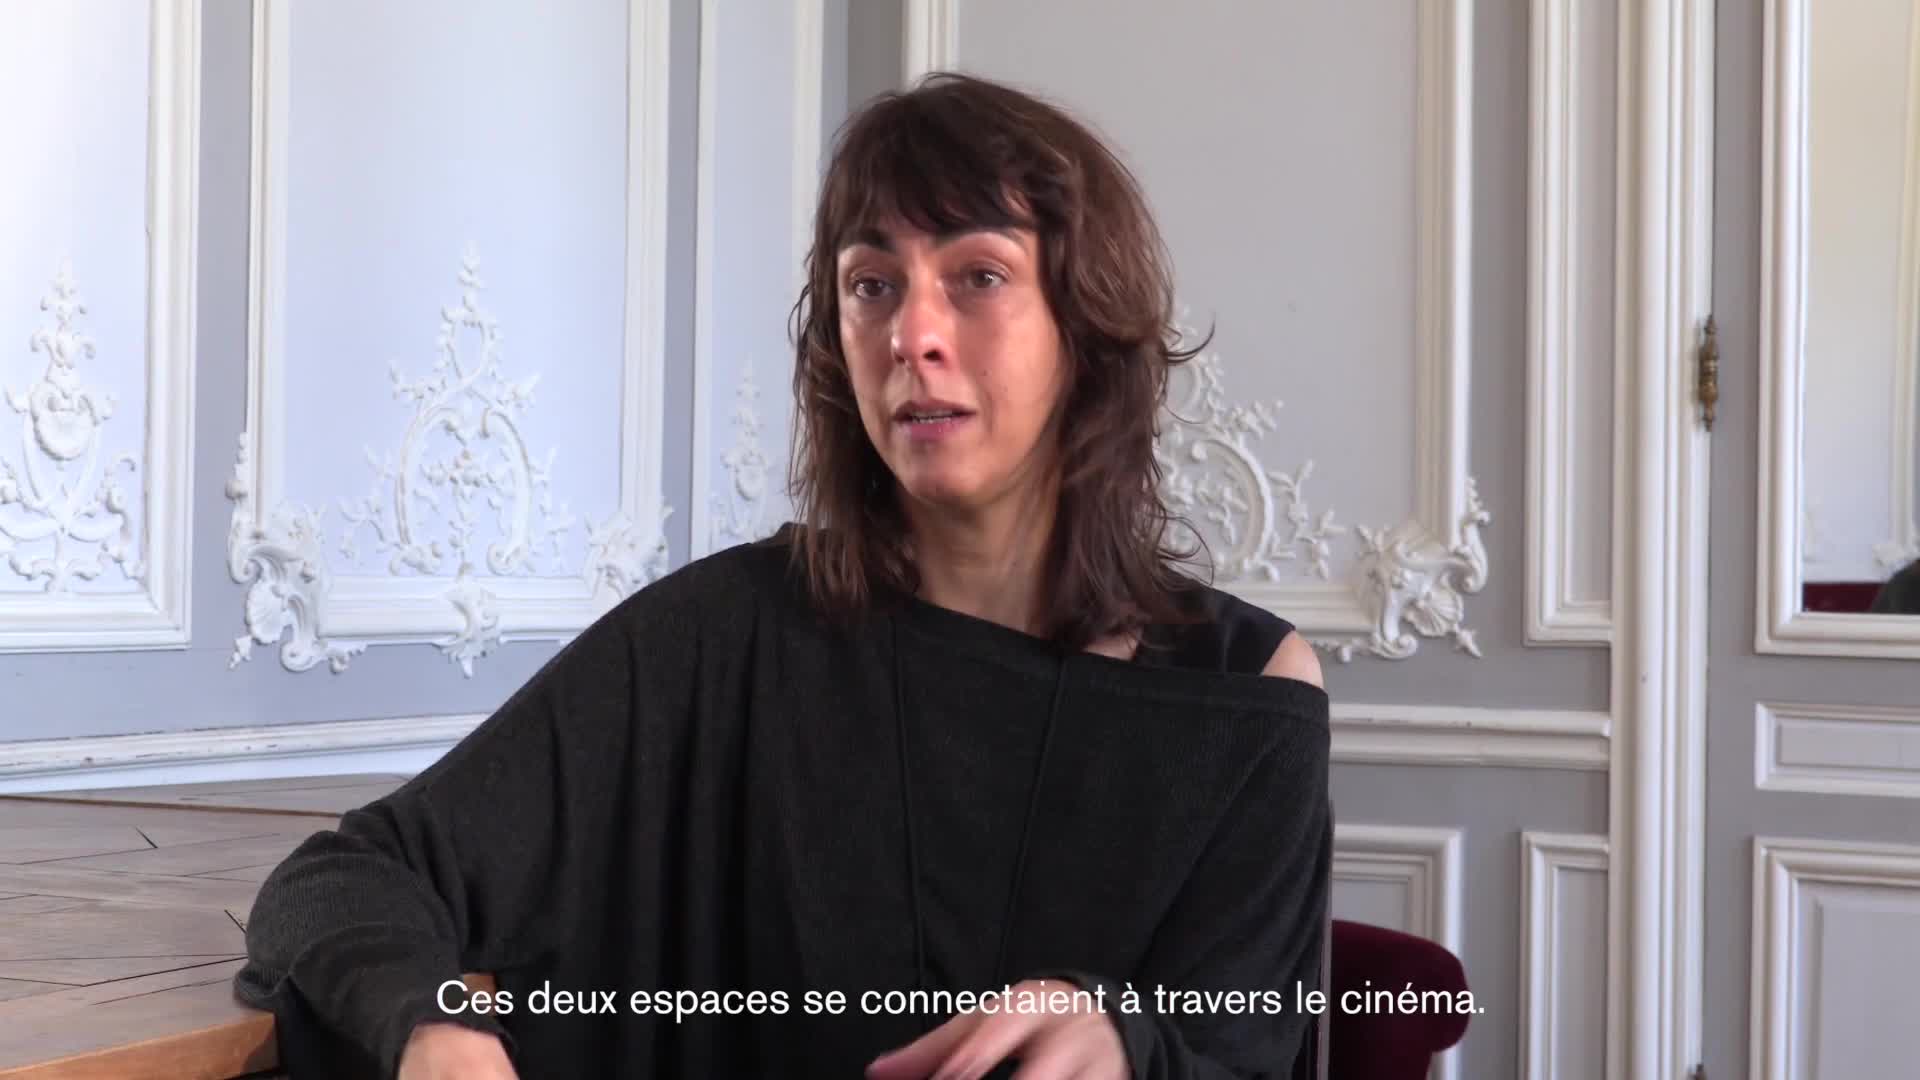 Vidéo "Ithaque" - Rencontre avec Christiane Jatahy (3/4)